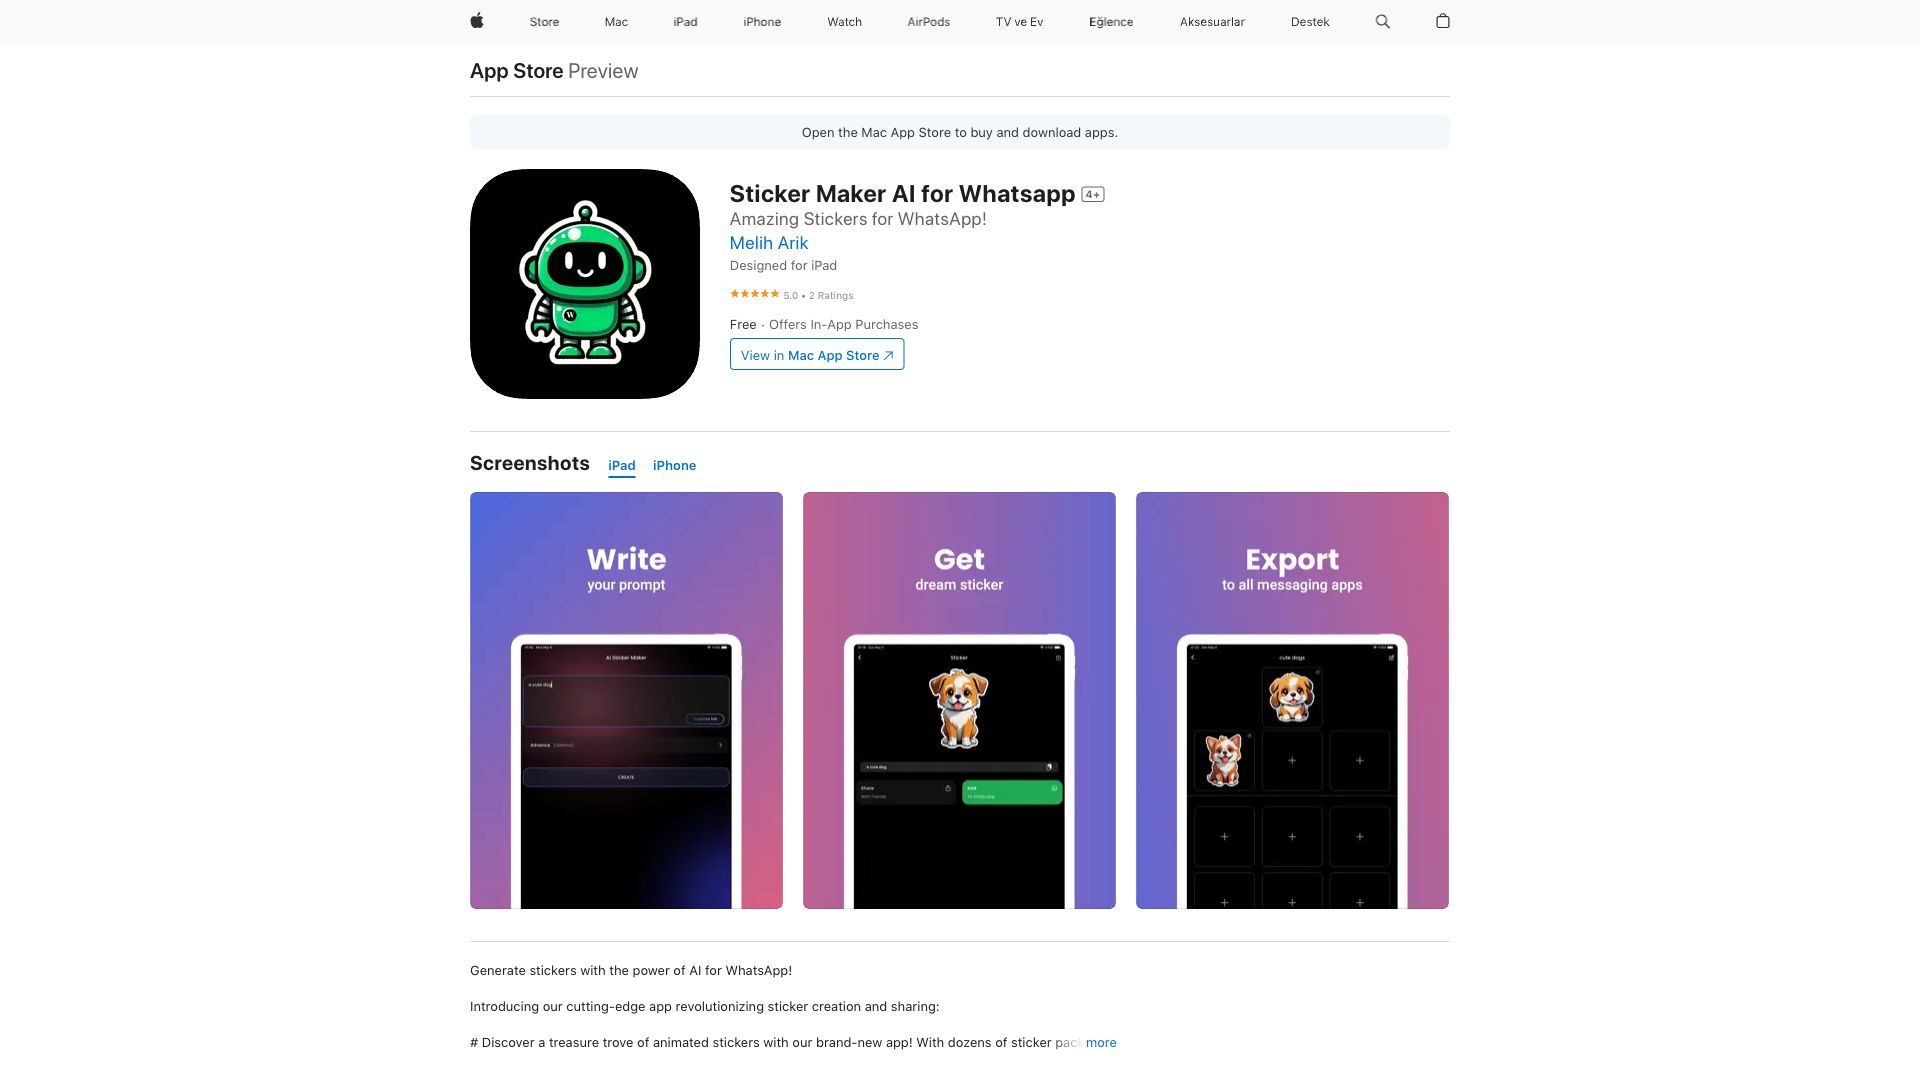 Sticker Maker AI for Whatsapp